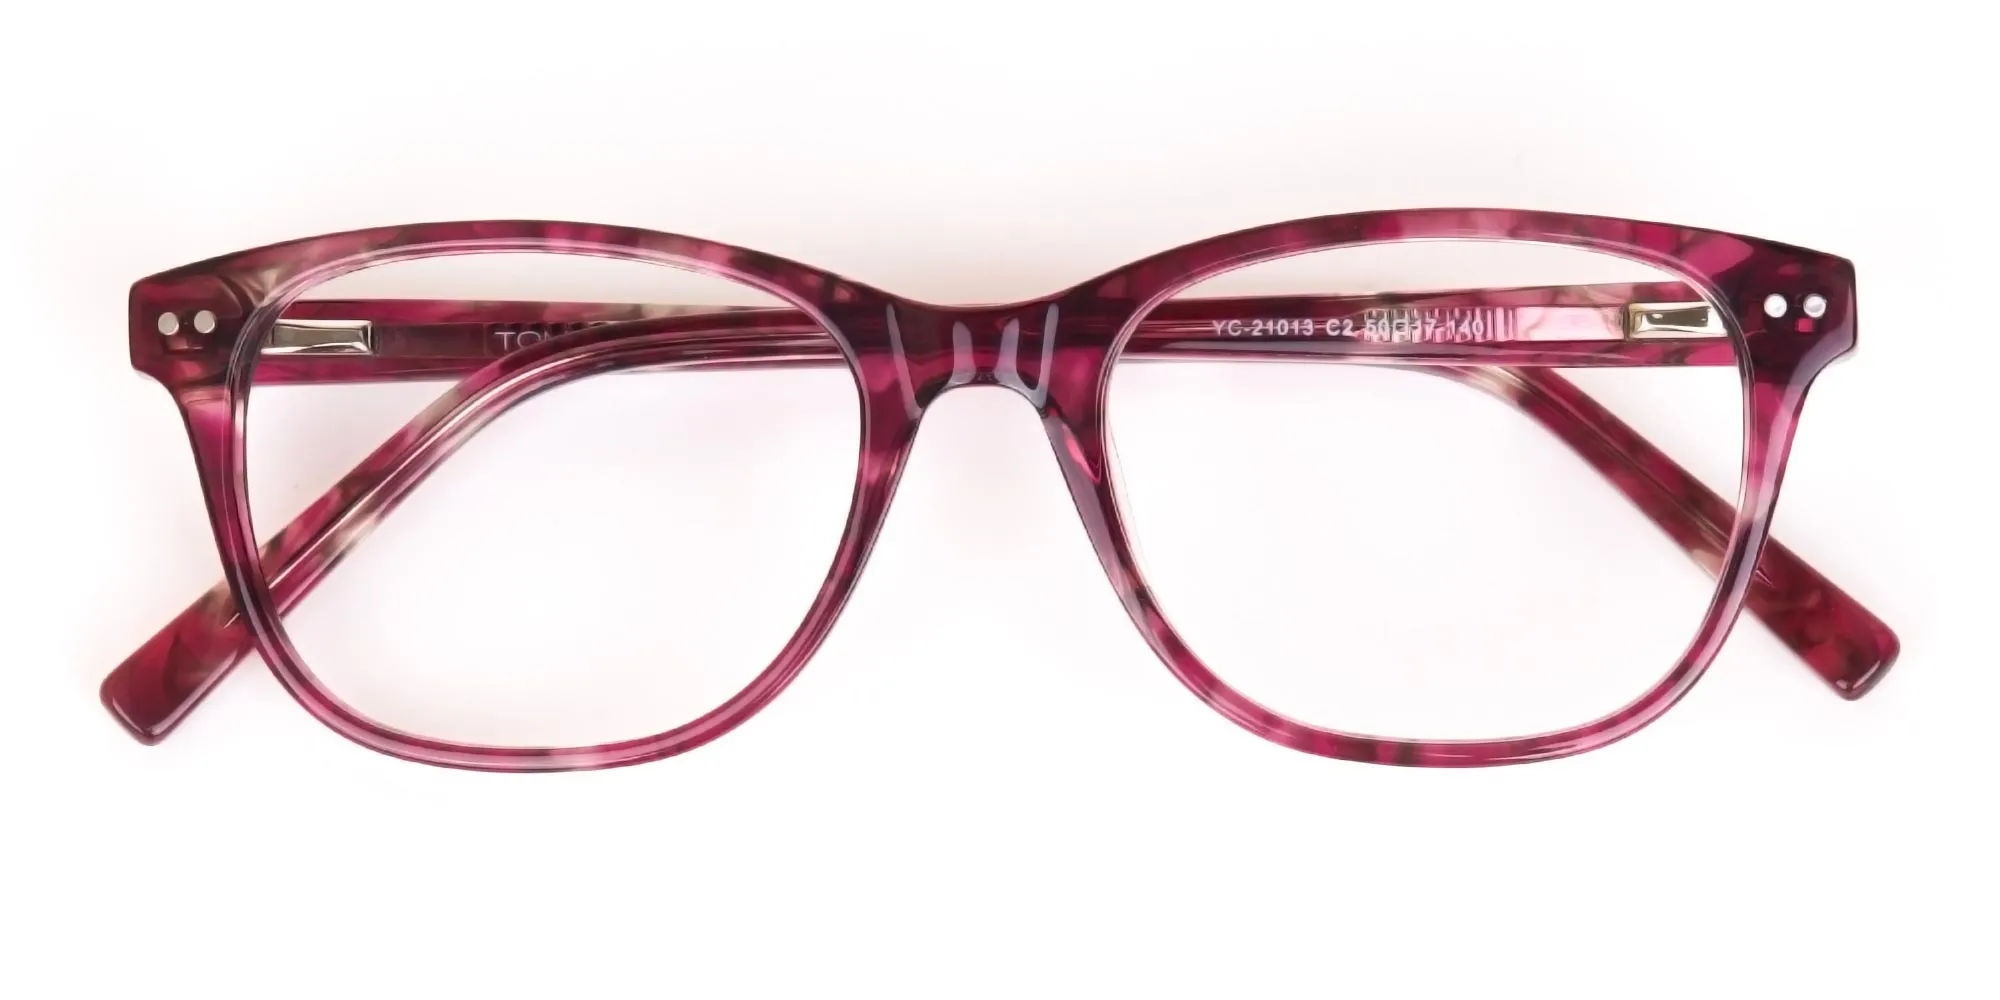 Rose Pink Marble Acetate Rectangular Glasses